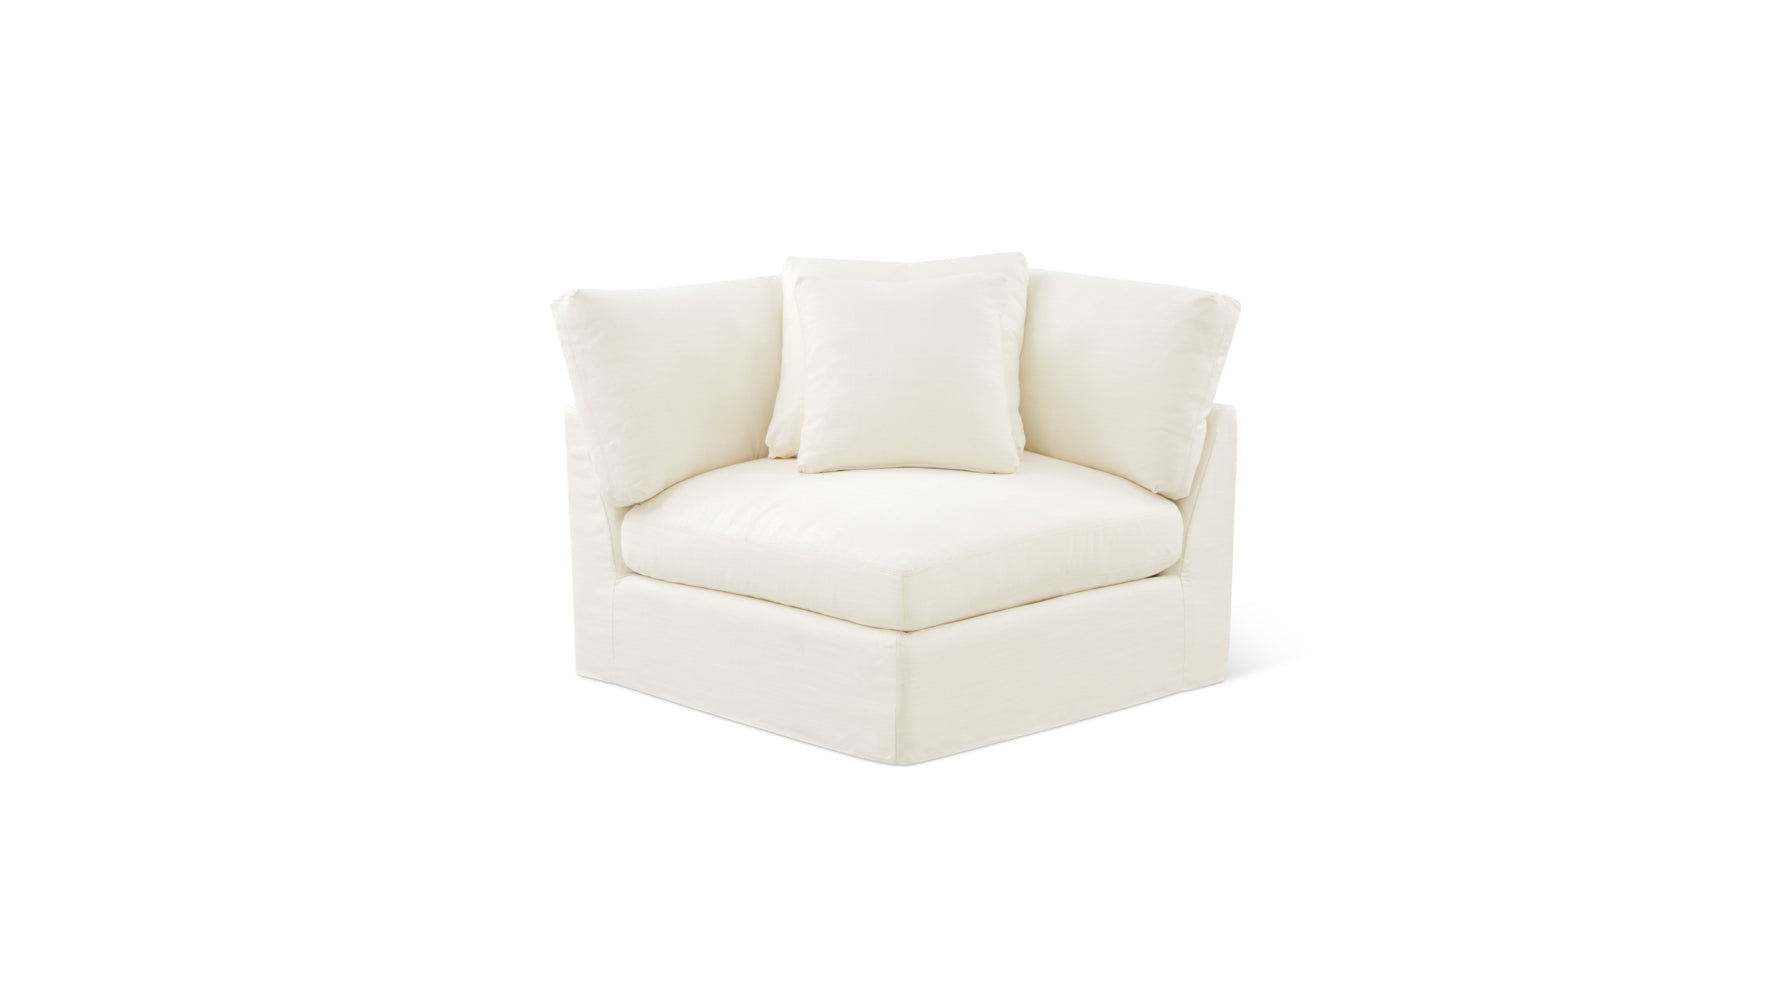 Get Together™ Corner Chair, Large, Cream Linen - Image 2